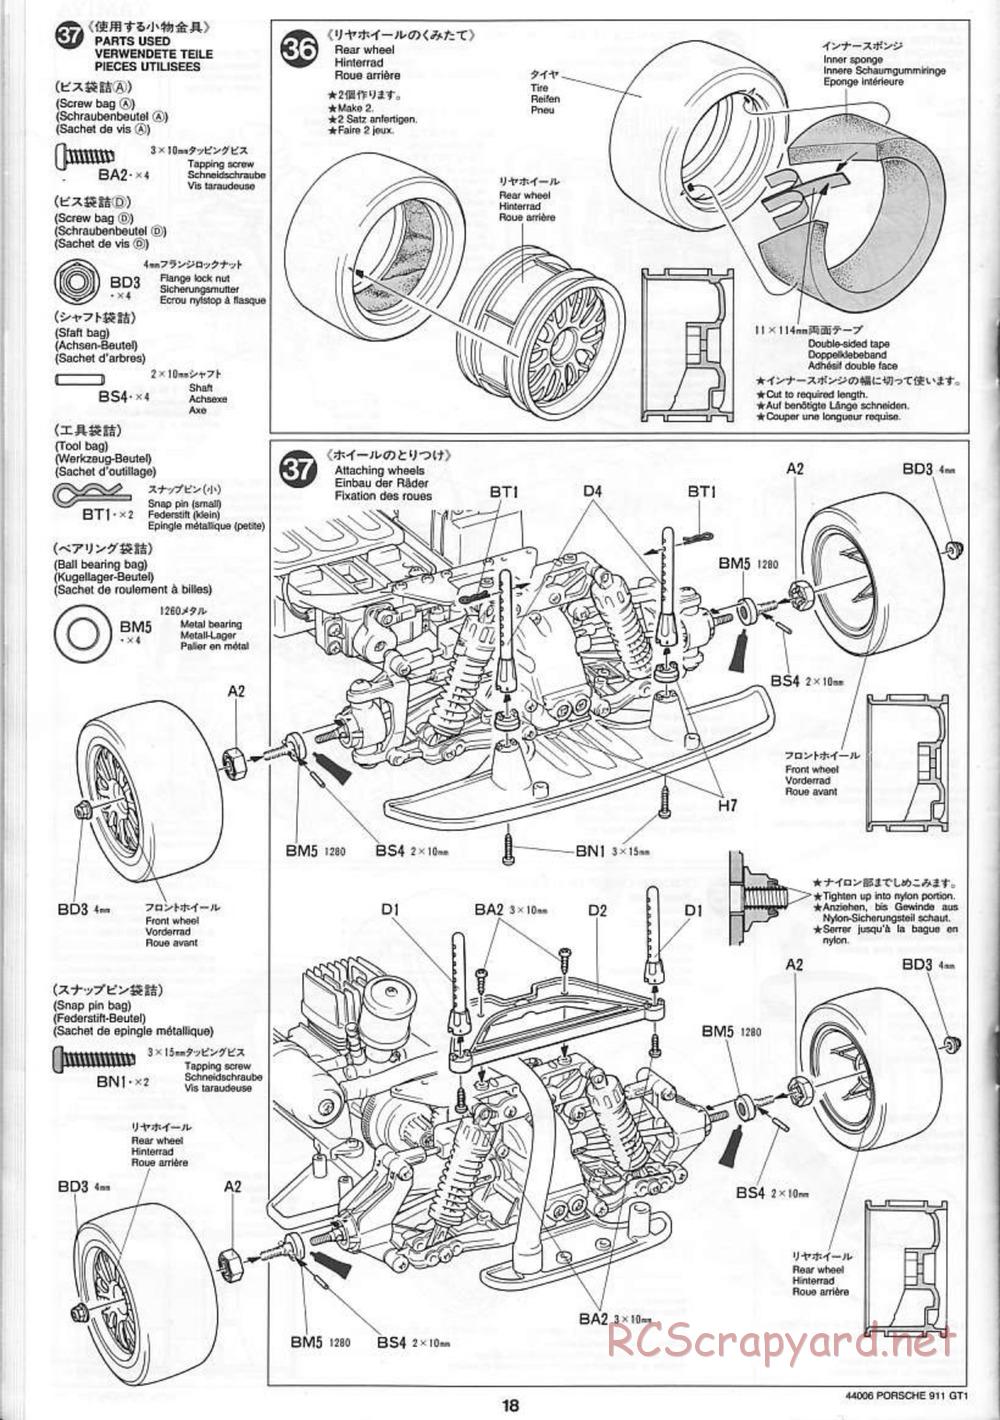 Tamiya - Porsche 911 GT1 - TGX Mk.1 Chassis - Manual - Page 18